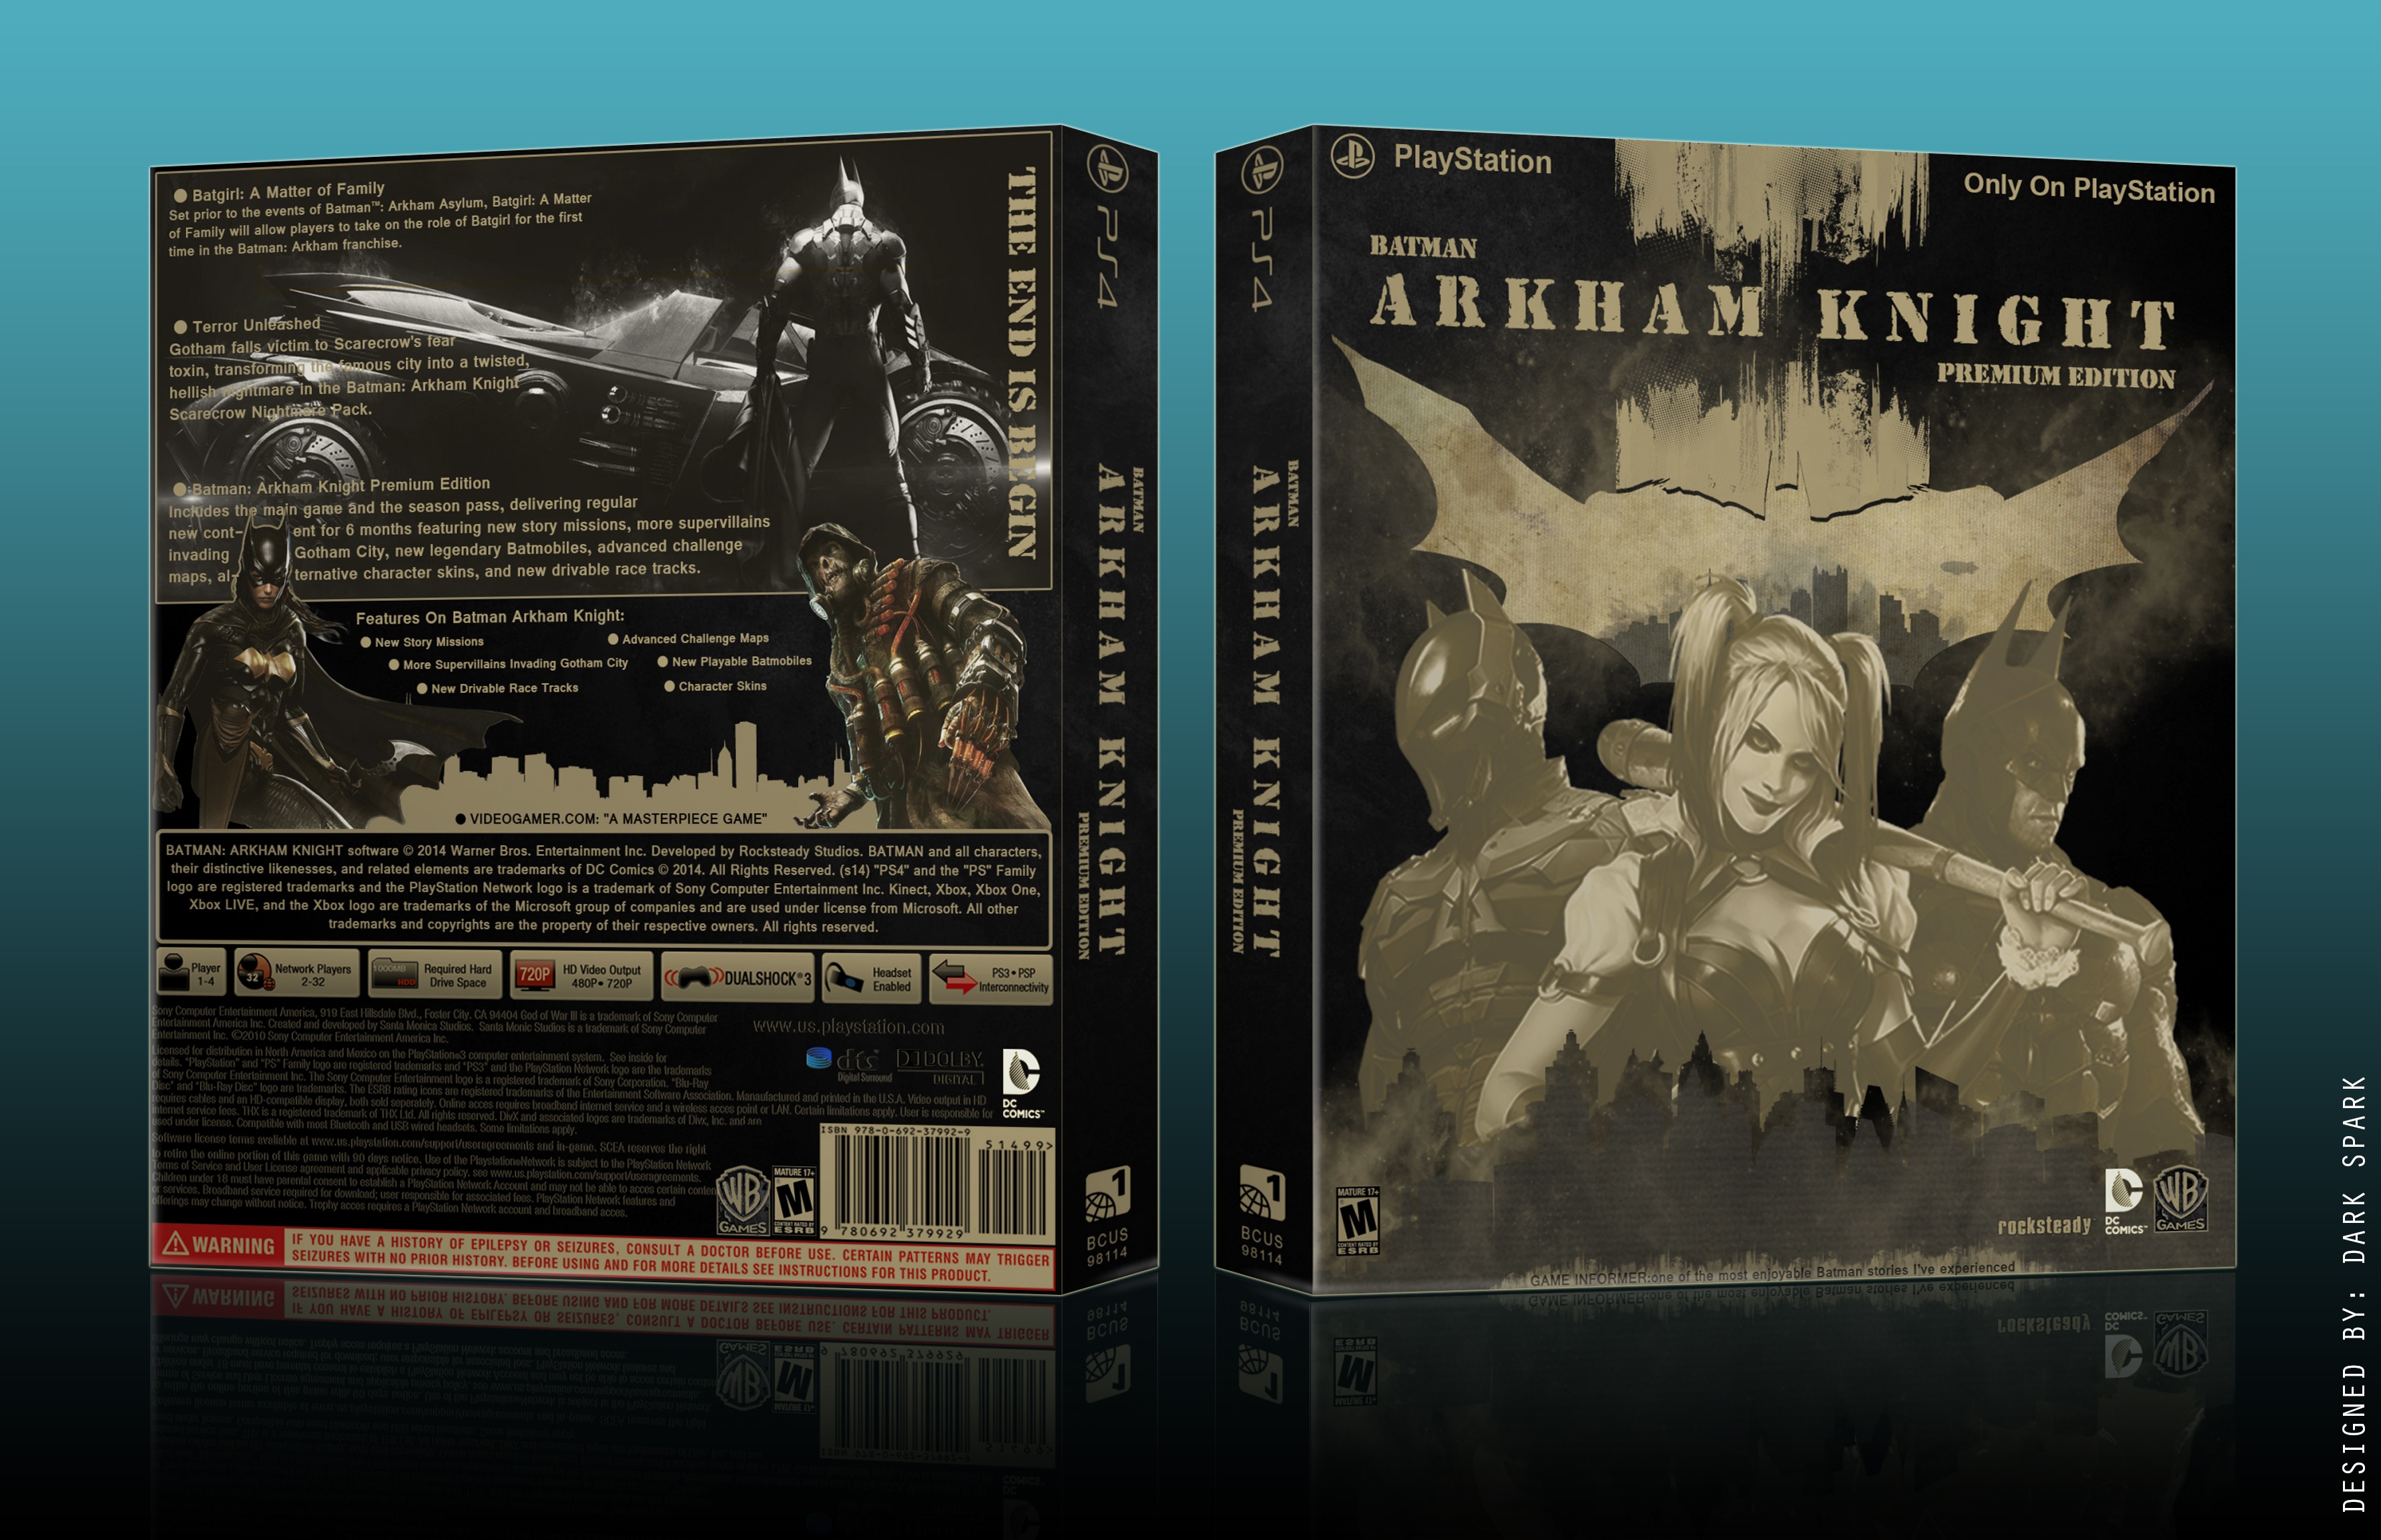 Batman: Arkham Knight Premium Edition box cover